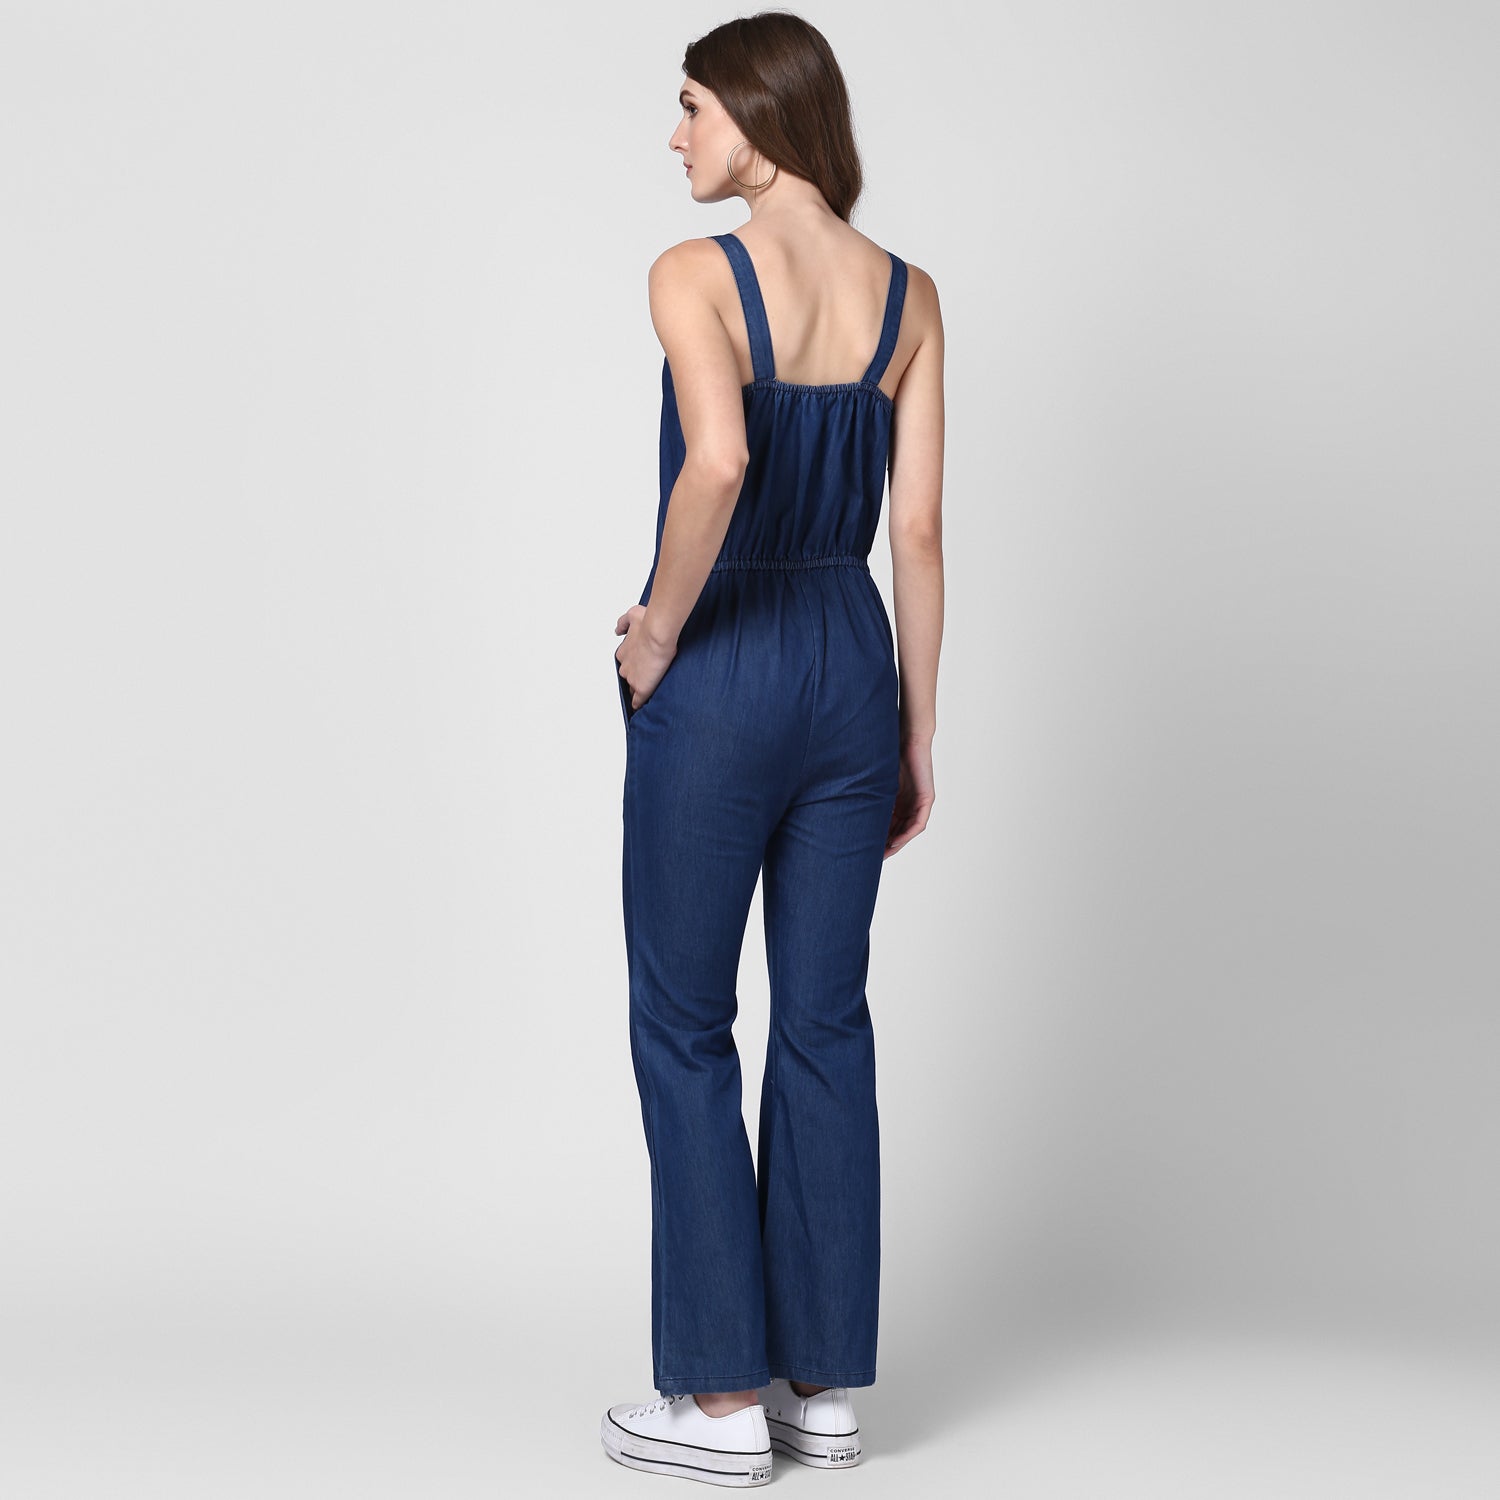 Women's Blue Denim Strap style Jumpsuit with bootcut pants - StyleStone